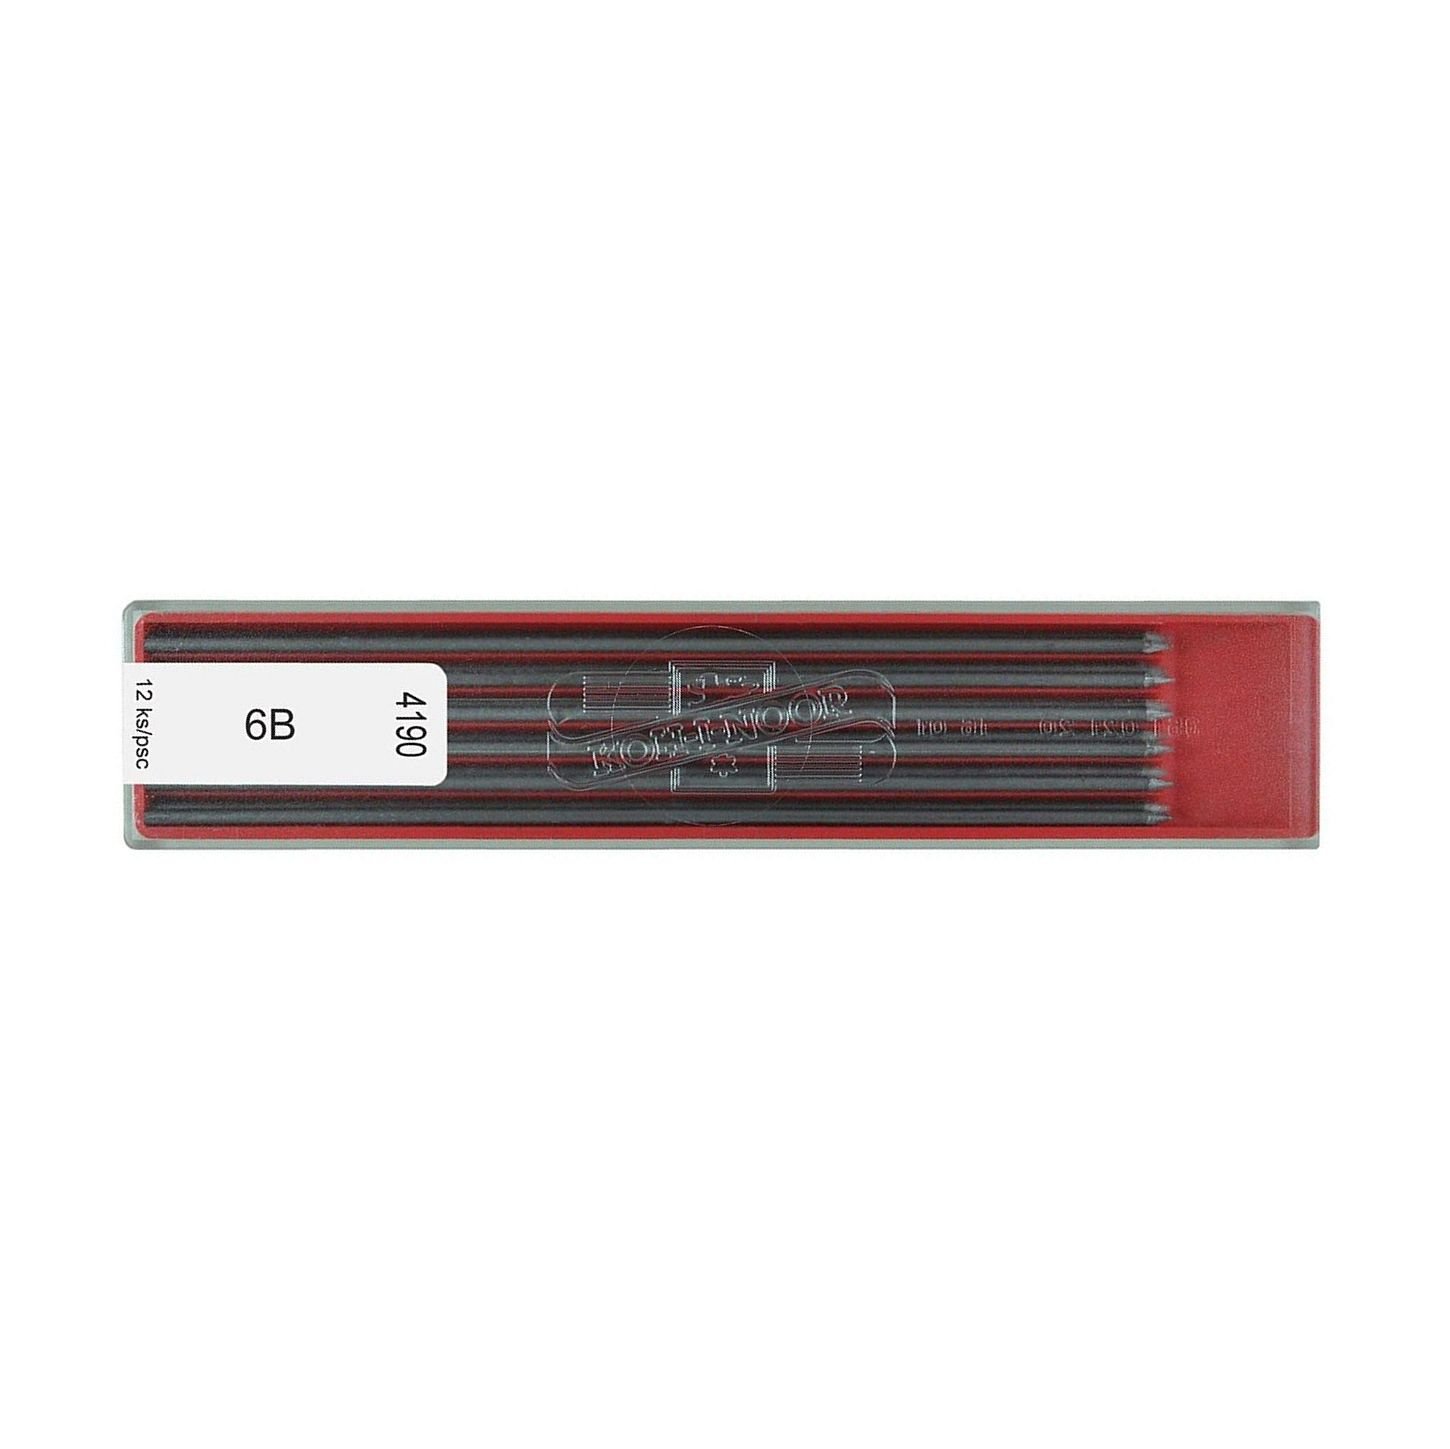 Koh-I-Noor Hardmuth High Quality Graphite Pencil Lead - Grade 6B - Lead Diameter 2 mm - Pack of 12